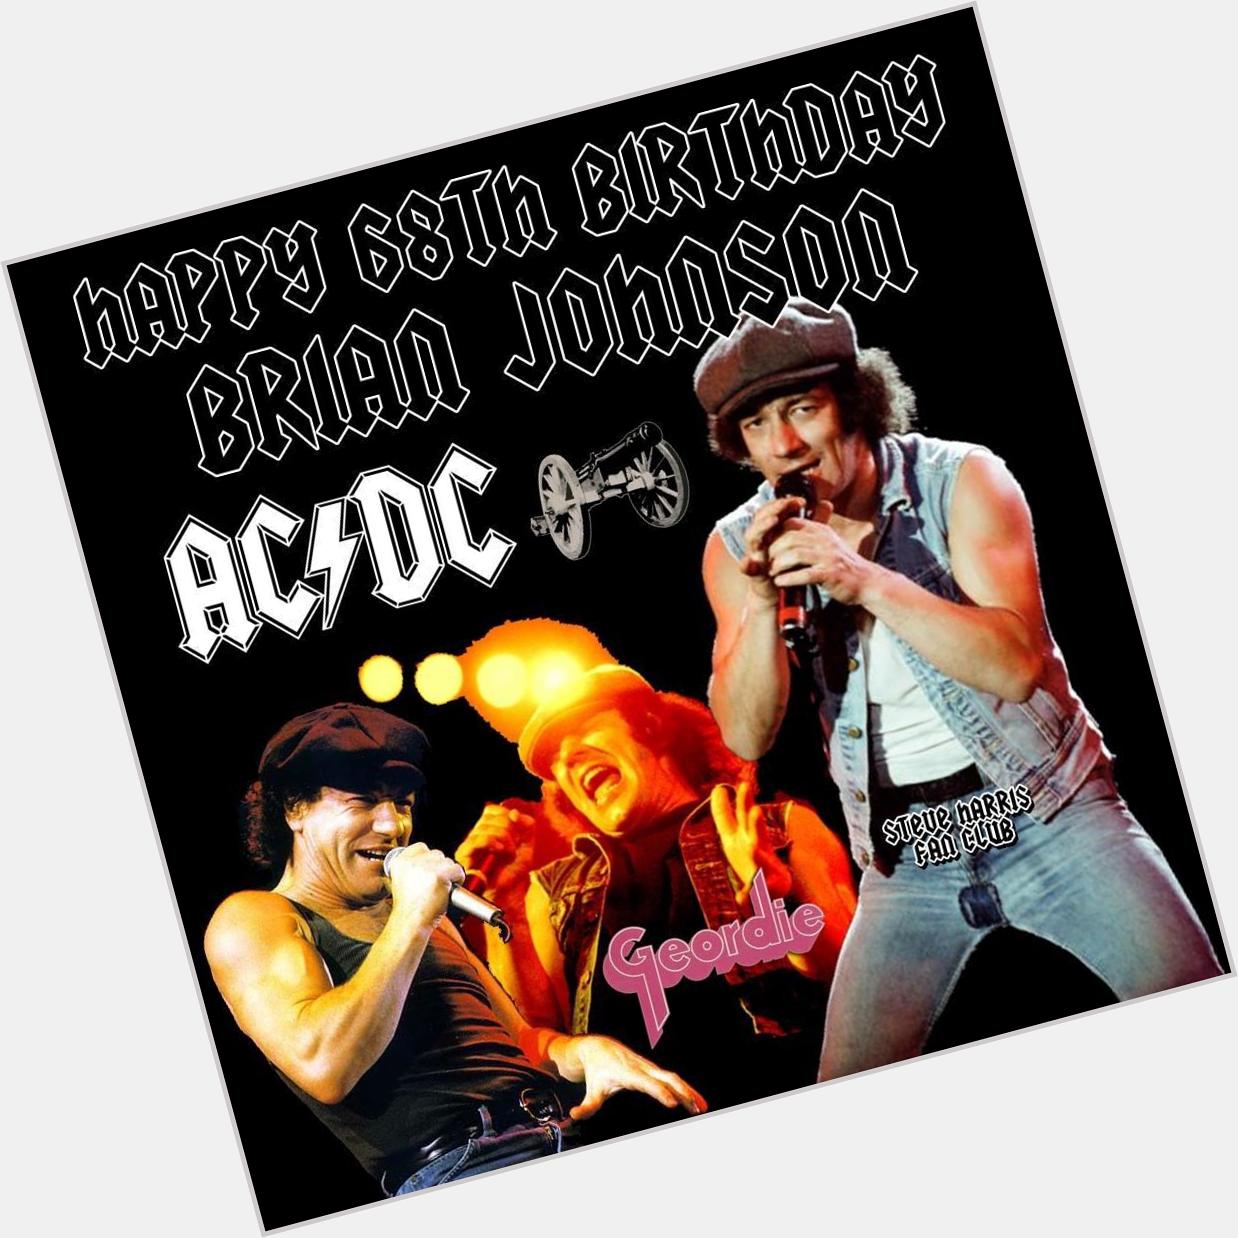 Happy 68th birthday Brian Johnson!!! rock on!!  